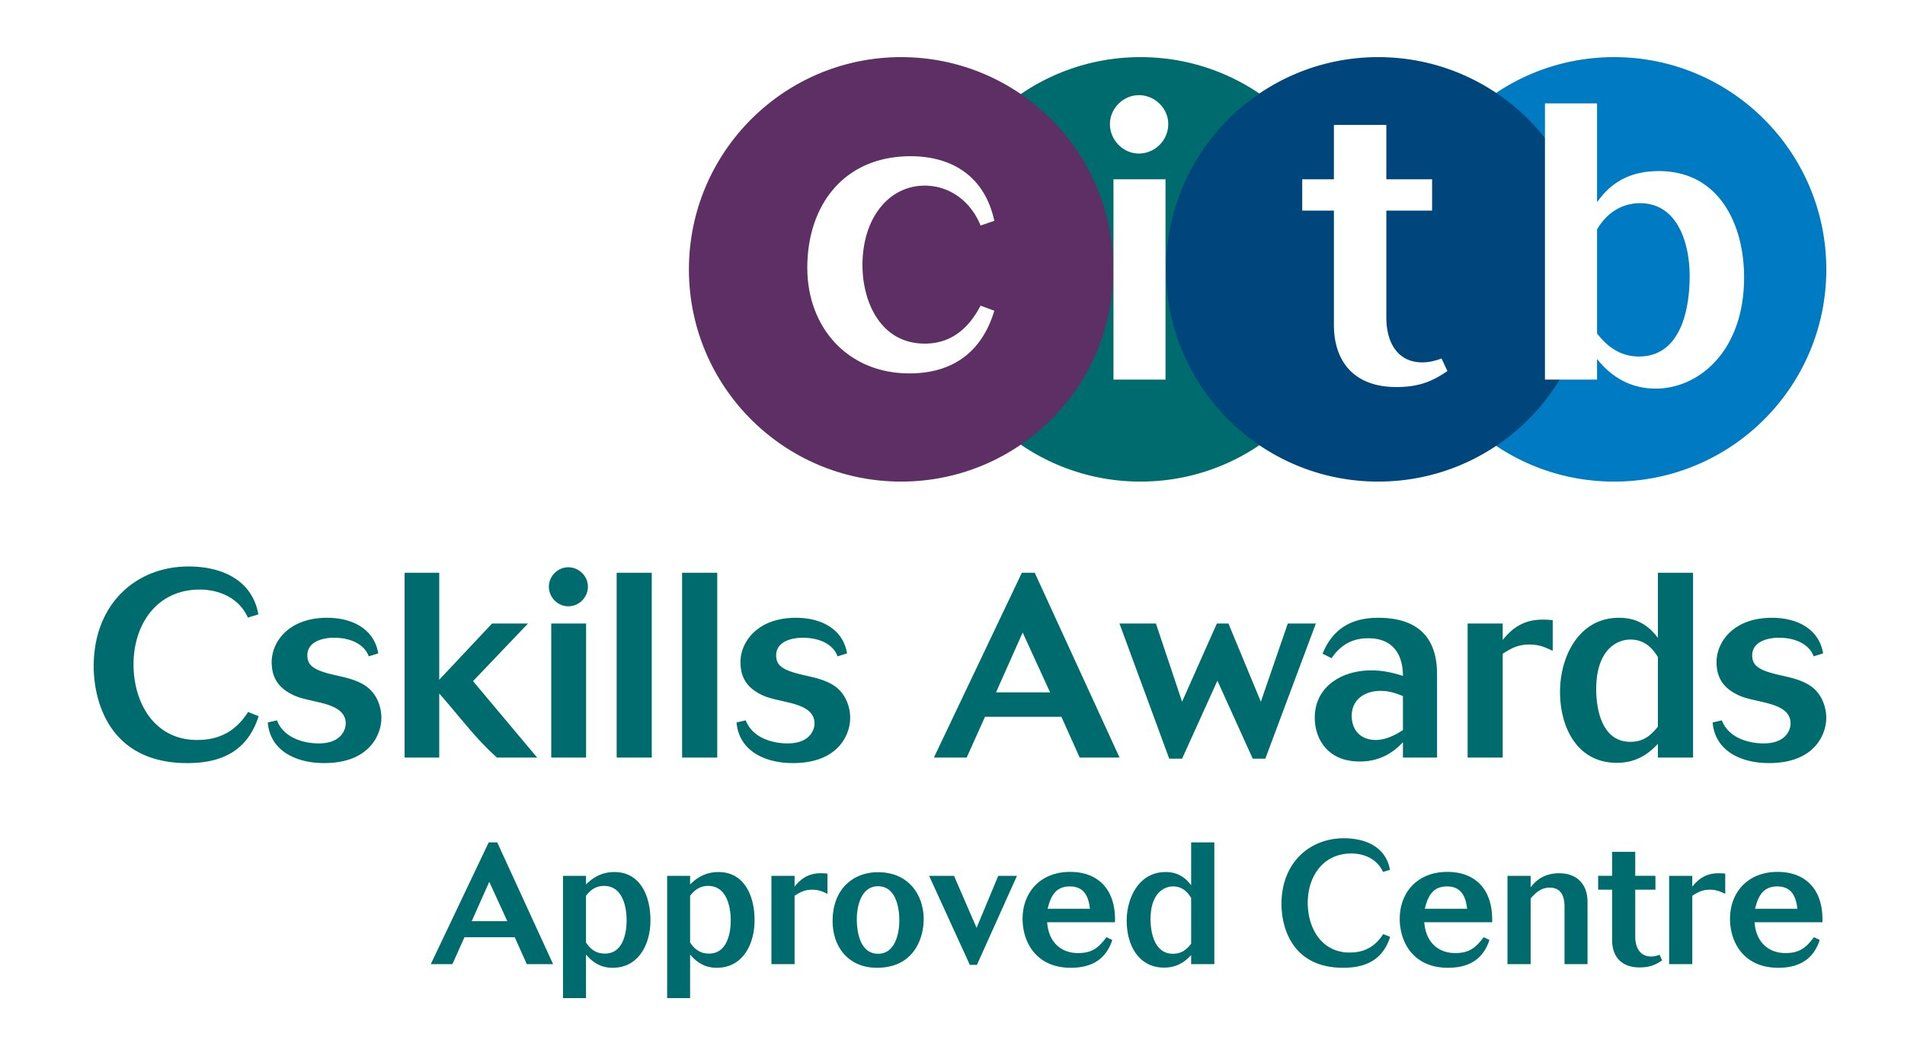 Cskills Awards logo